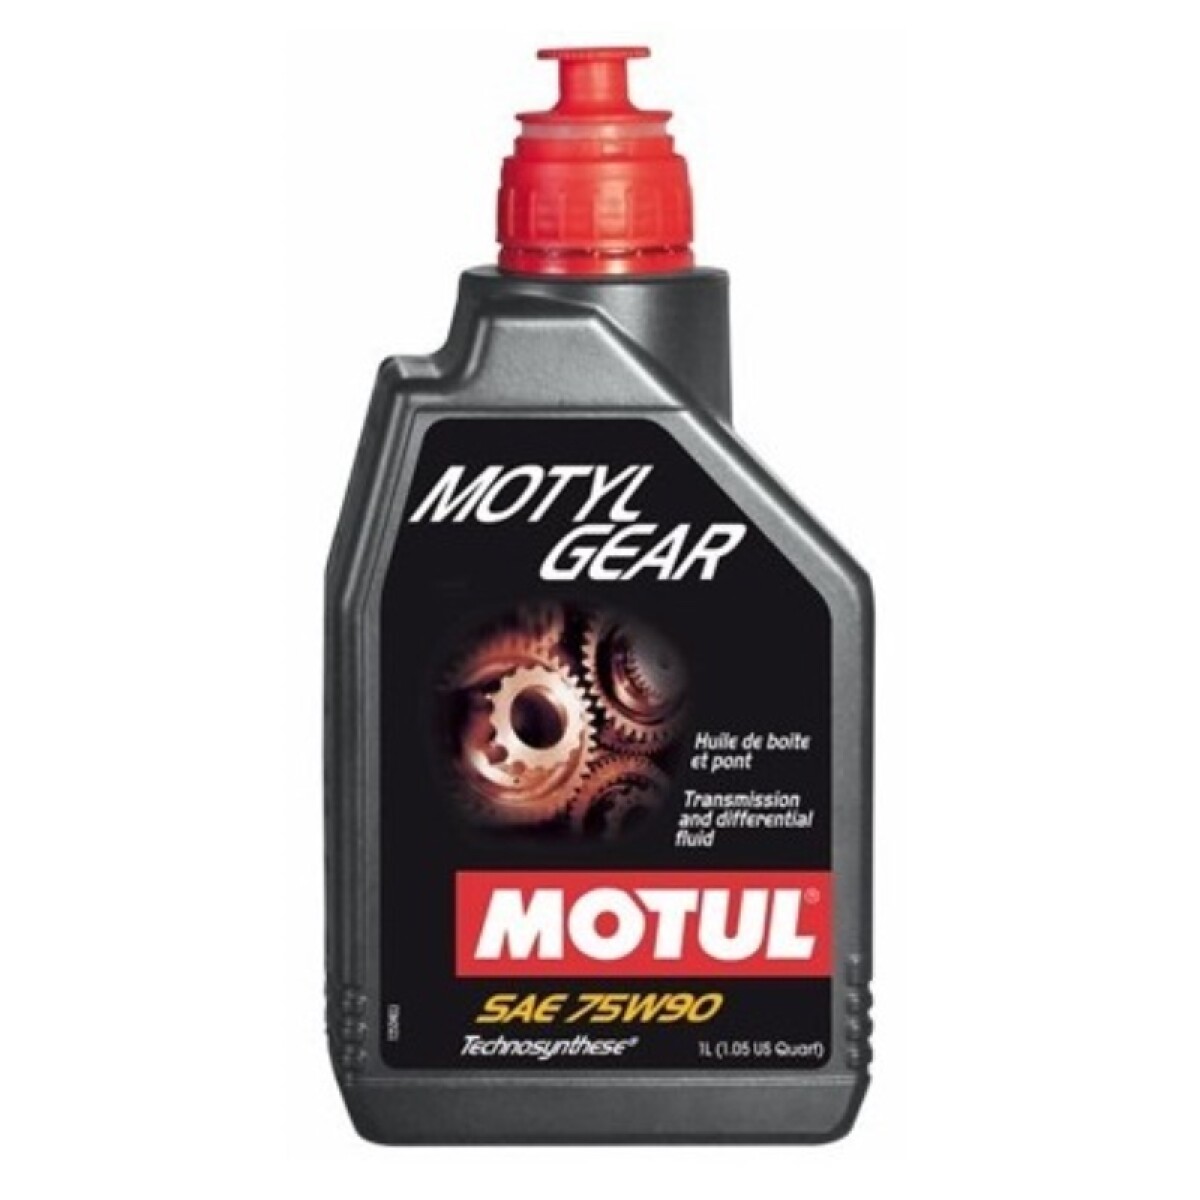 Motul Motyl Gear 75w90 Semisintetico 1l 